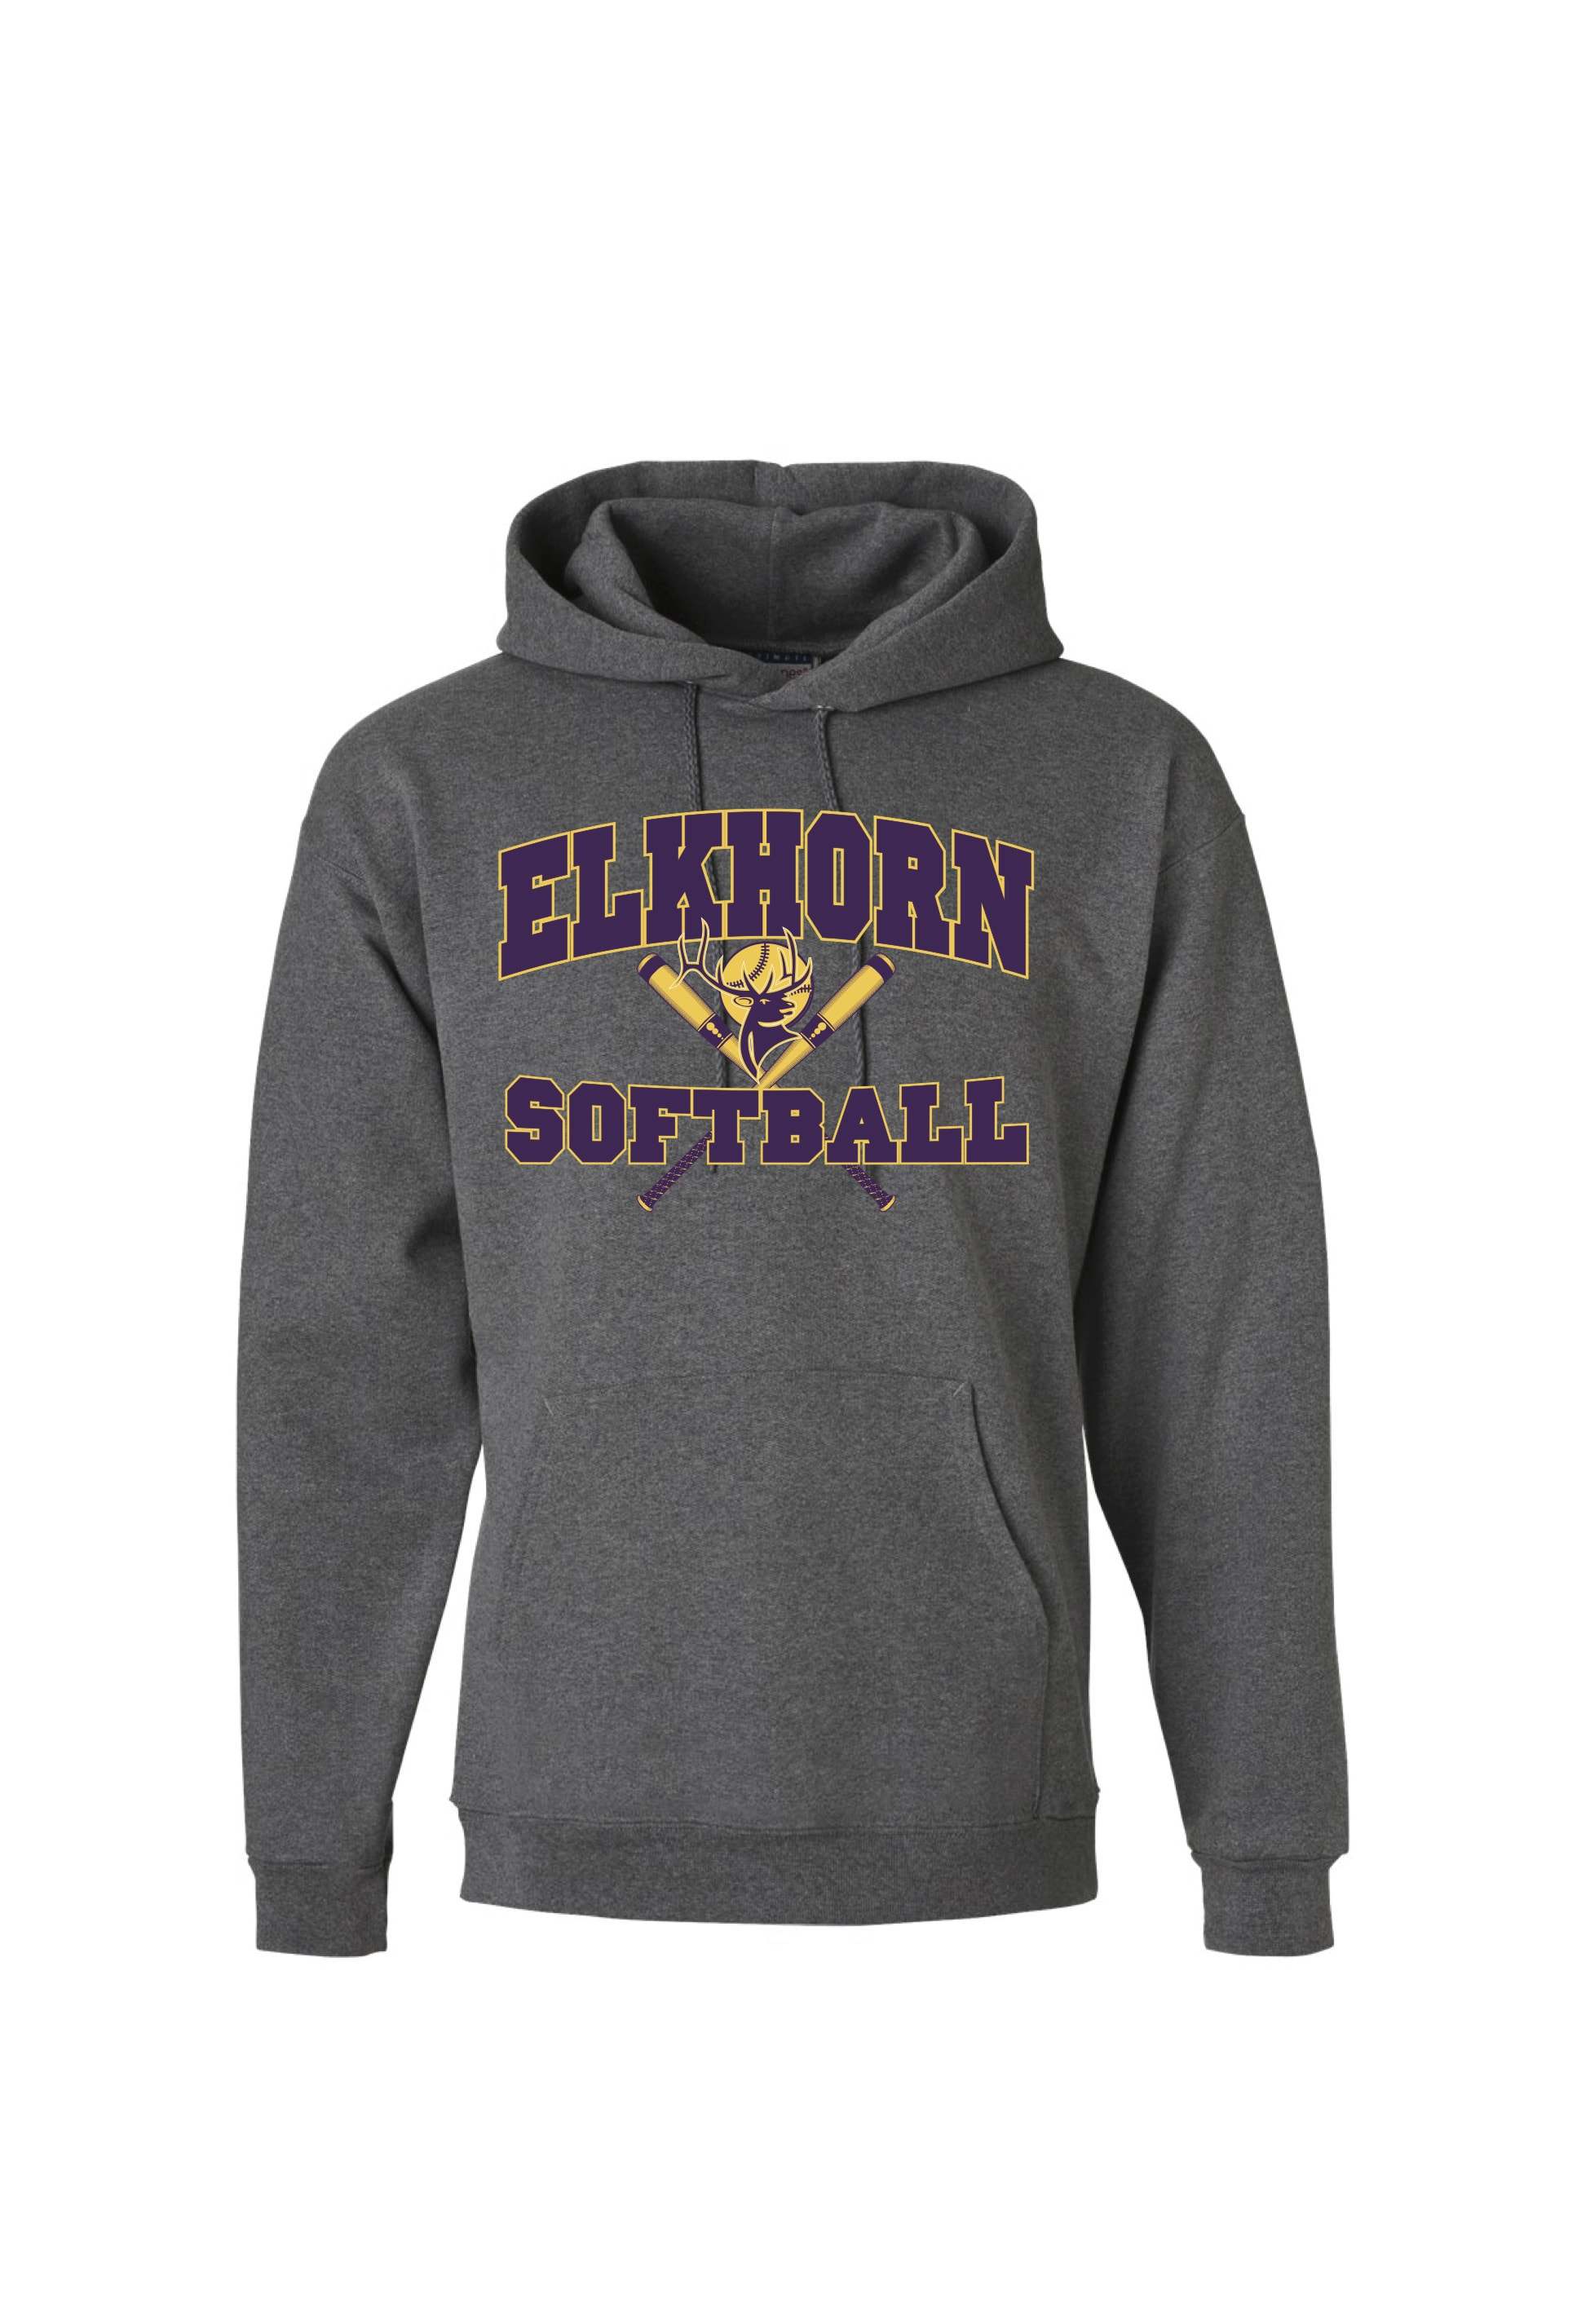 Elkhorn Softball Hooded Sweatshirt